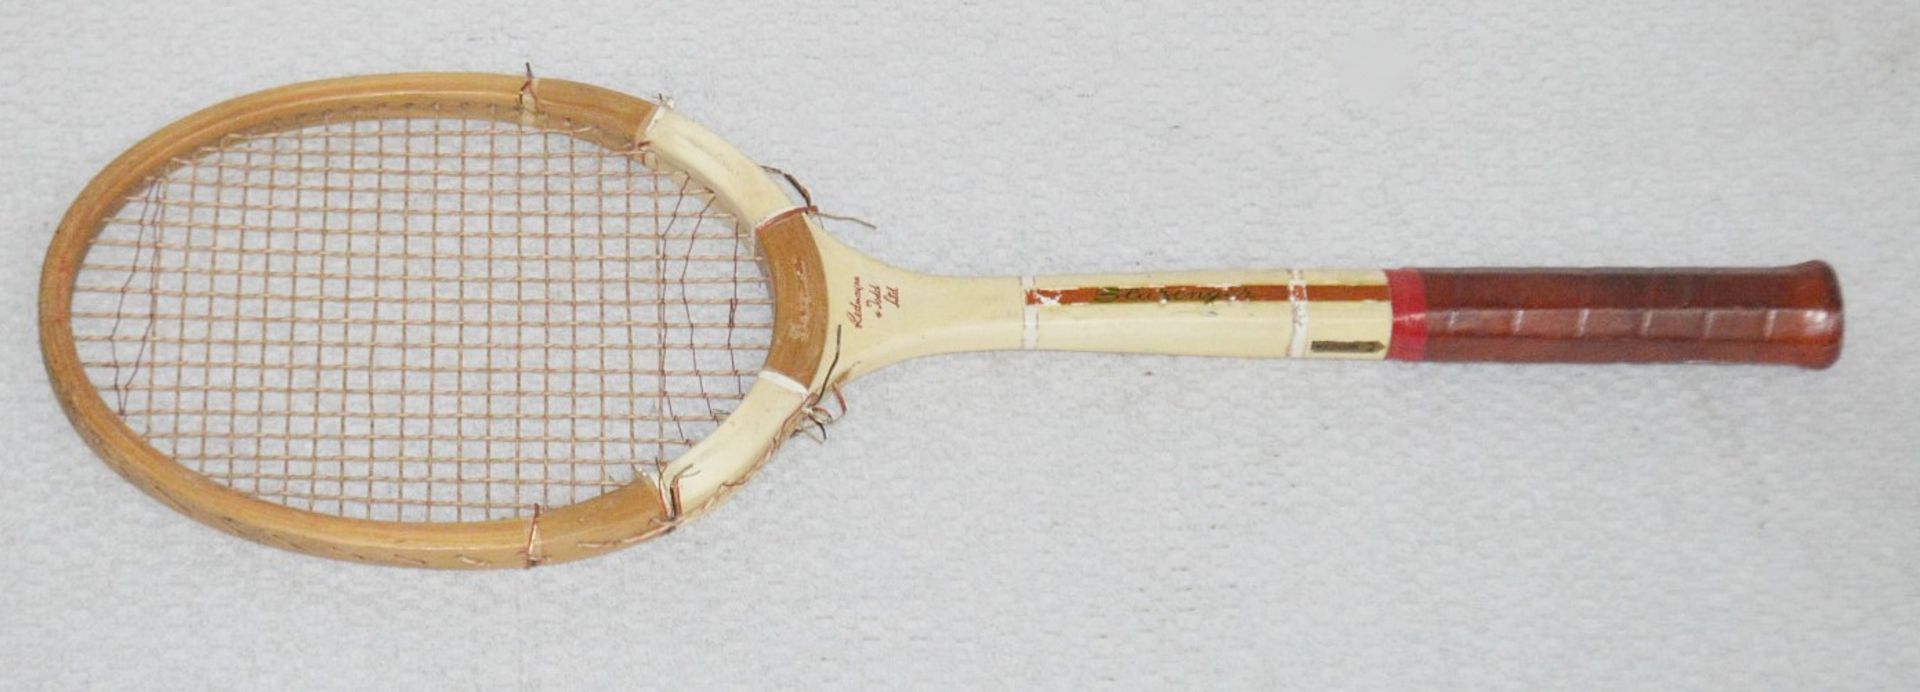 5 x Assorted Vintage Tennis Rackets - Ex-Display Props - Average Length: 69cm - Ref: HAR243 GIT - - Image 3 of 12